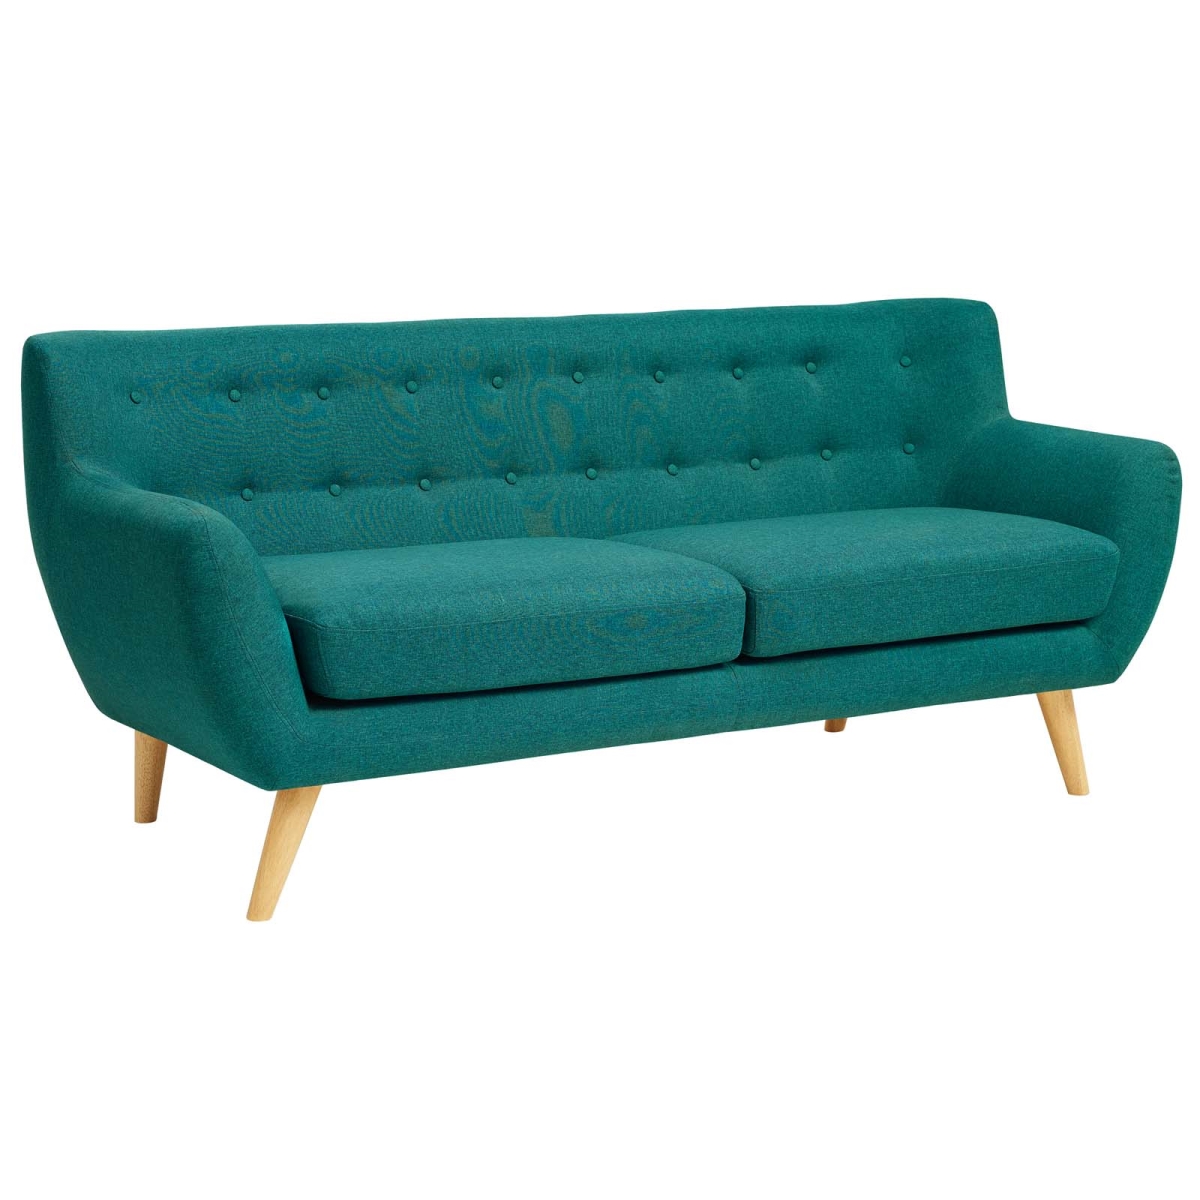 Modway Eei-1633-tea Remark Upholstered Sofa, Teal